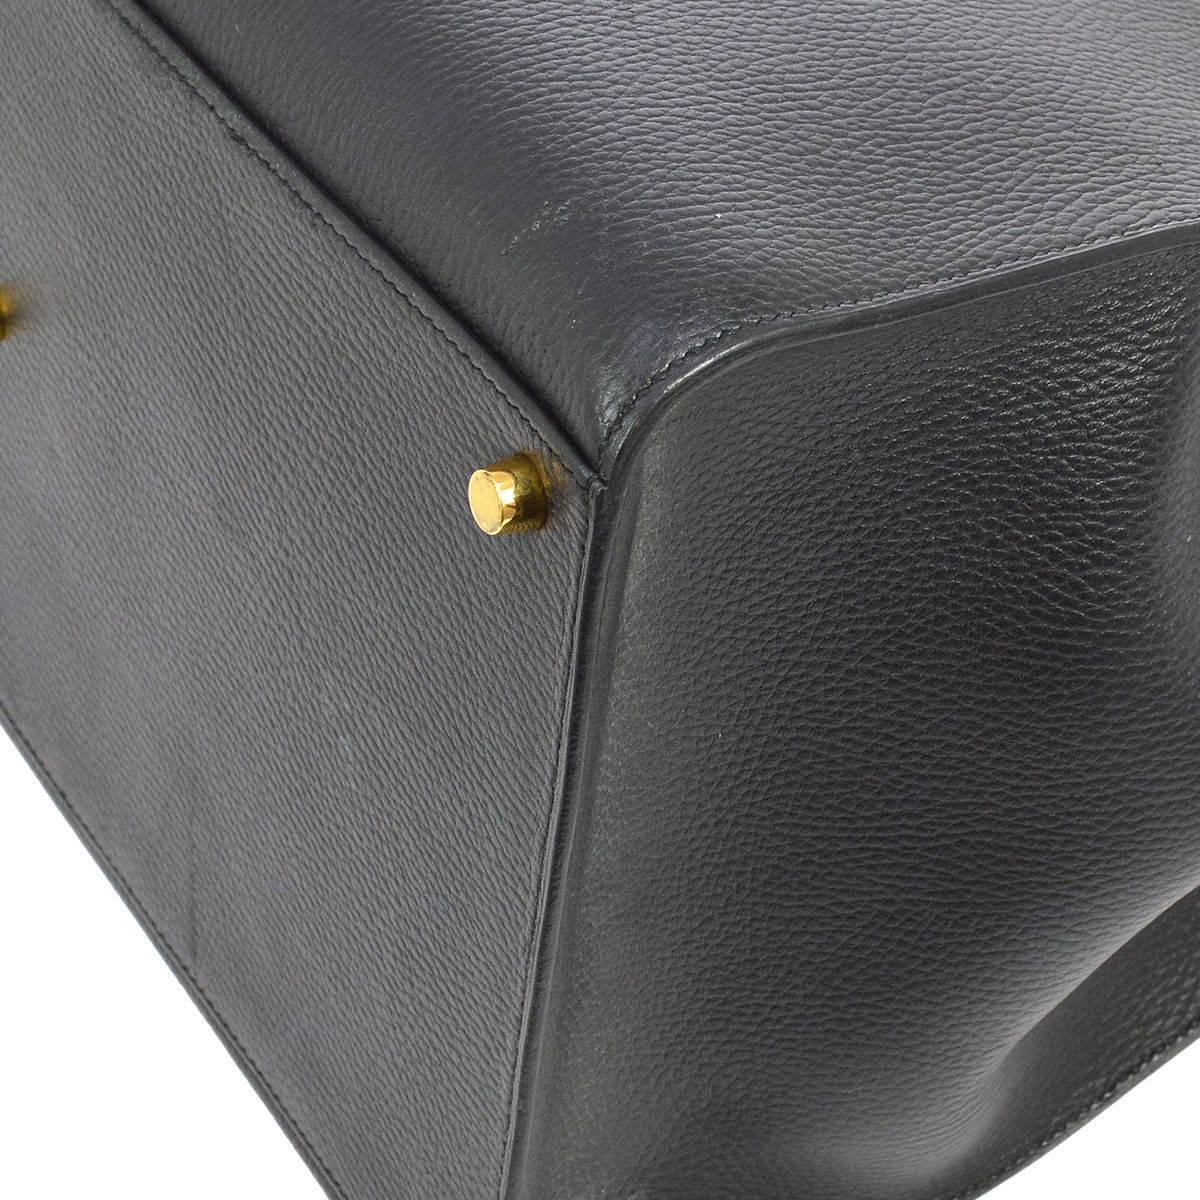 Hermes Black Cognac Leather Gold Men's Large Carryall Weekender Travel Tote Bag 1